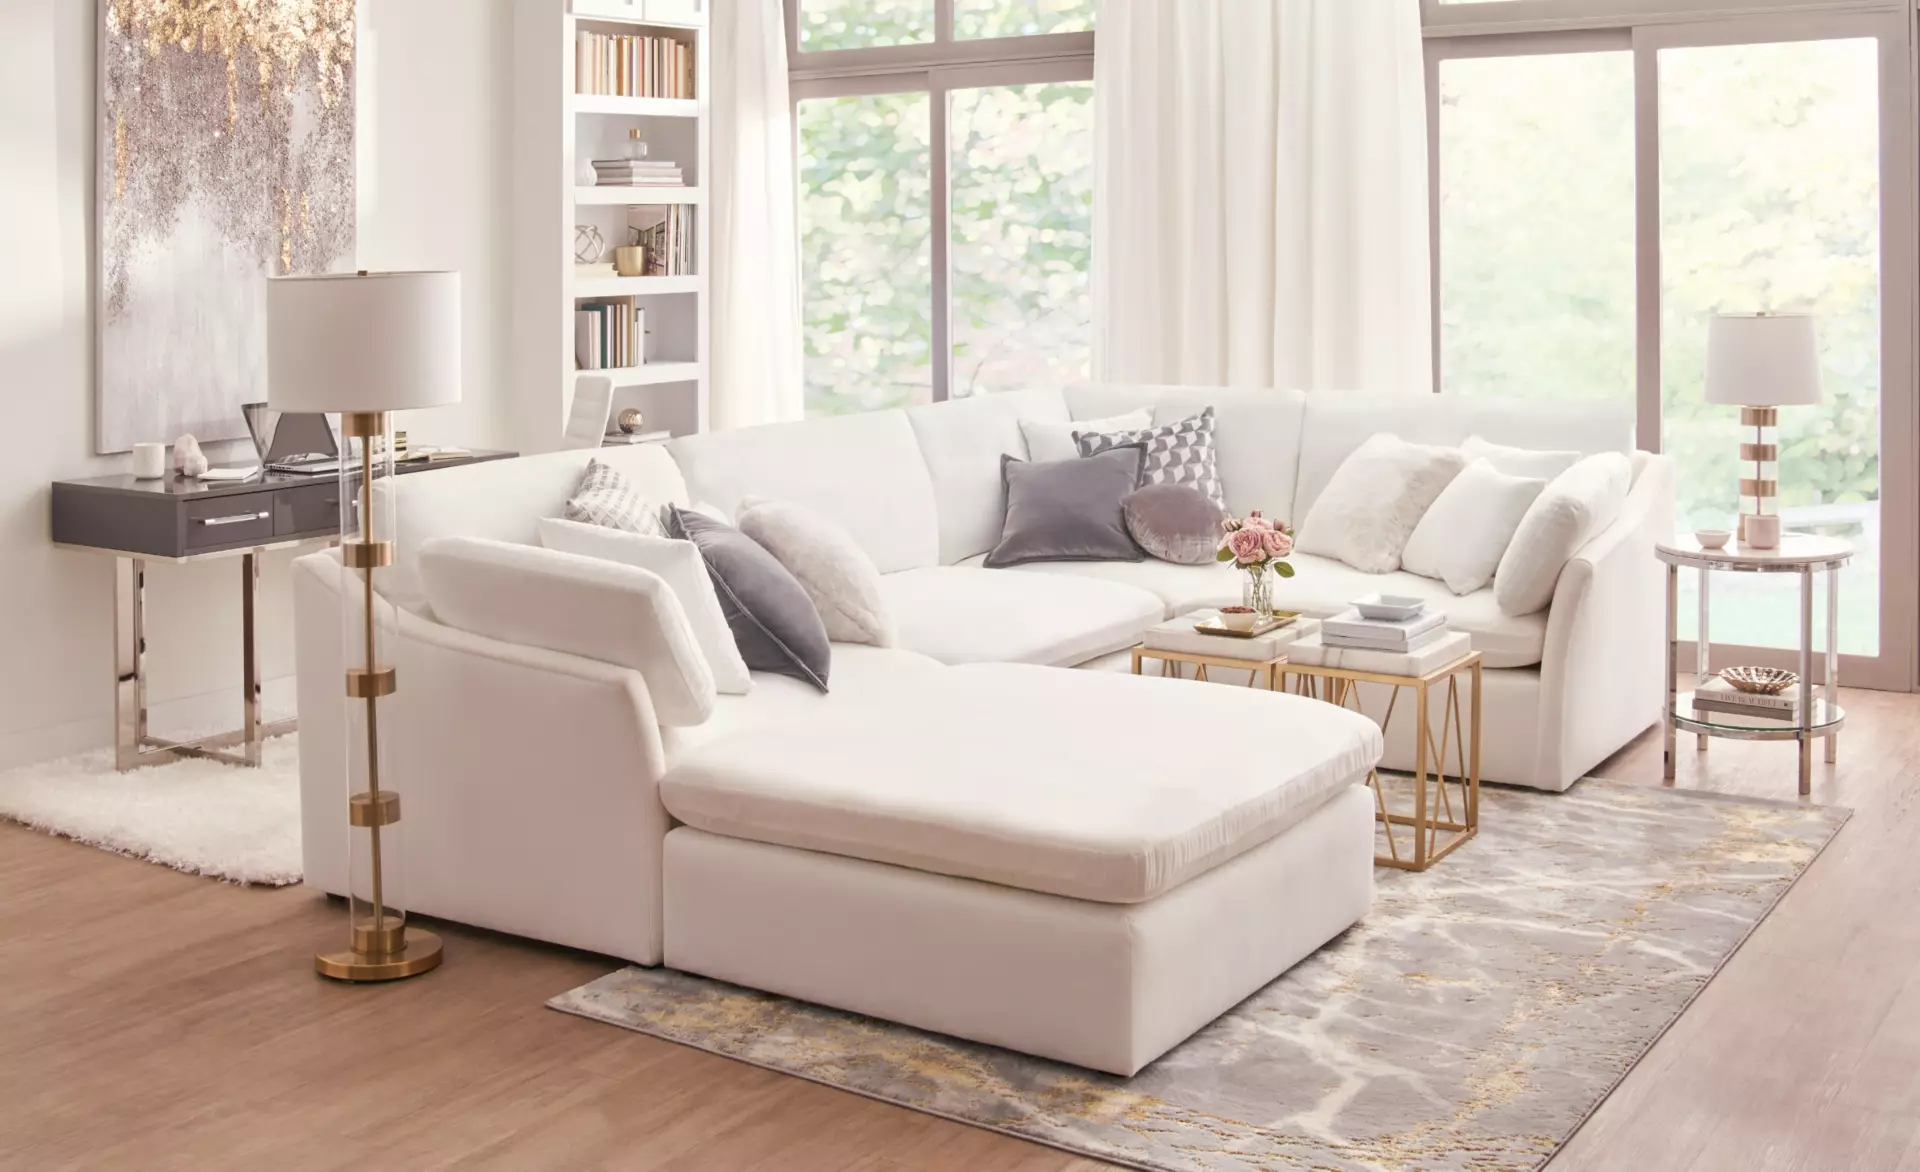 Designer Looks Westport Living Room Image